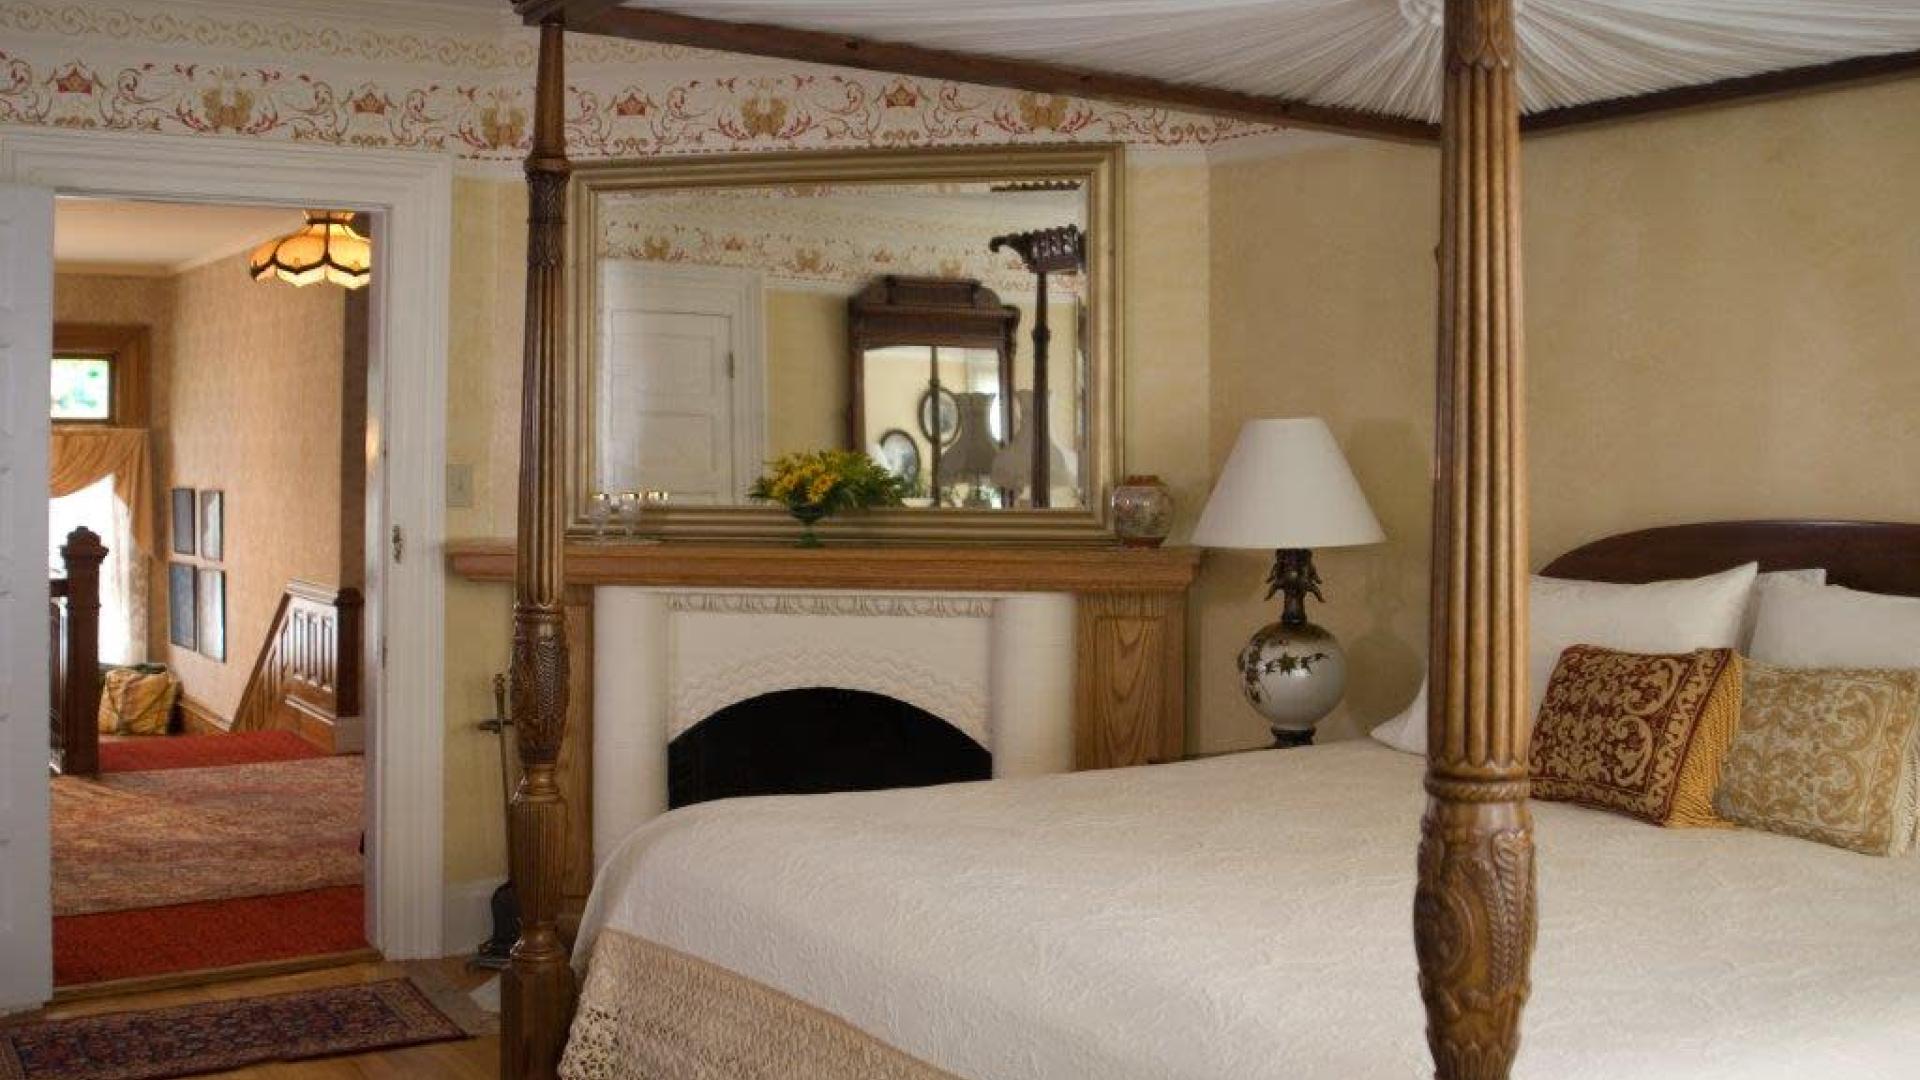 Cornerstone Victorian Bed & Breakfast